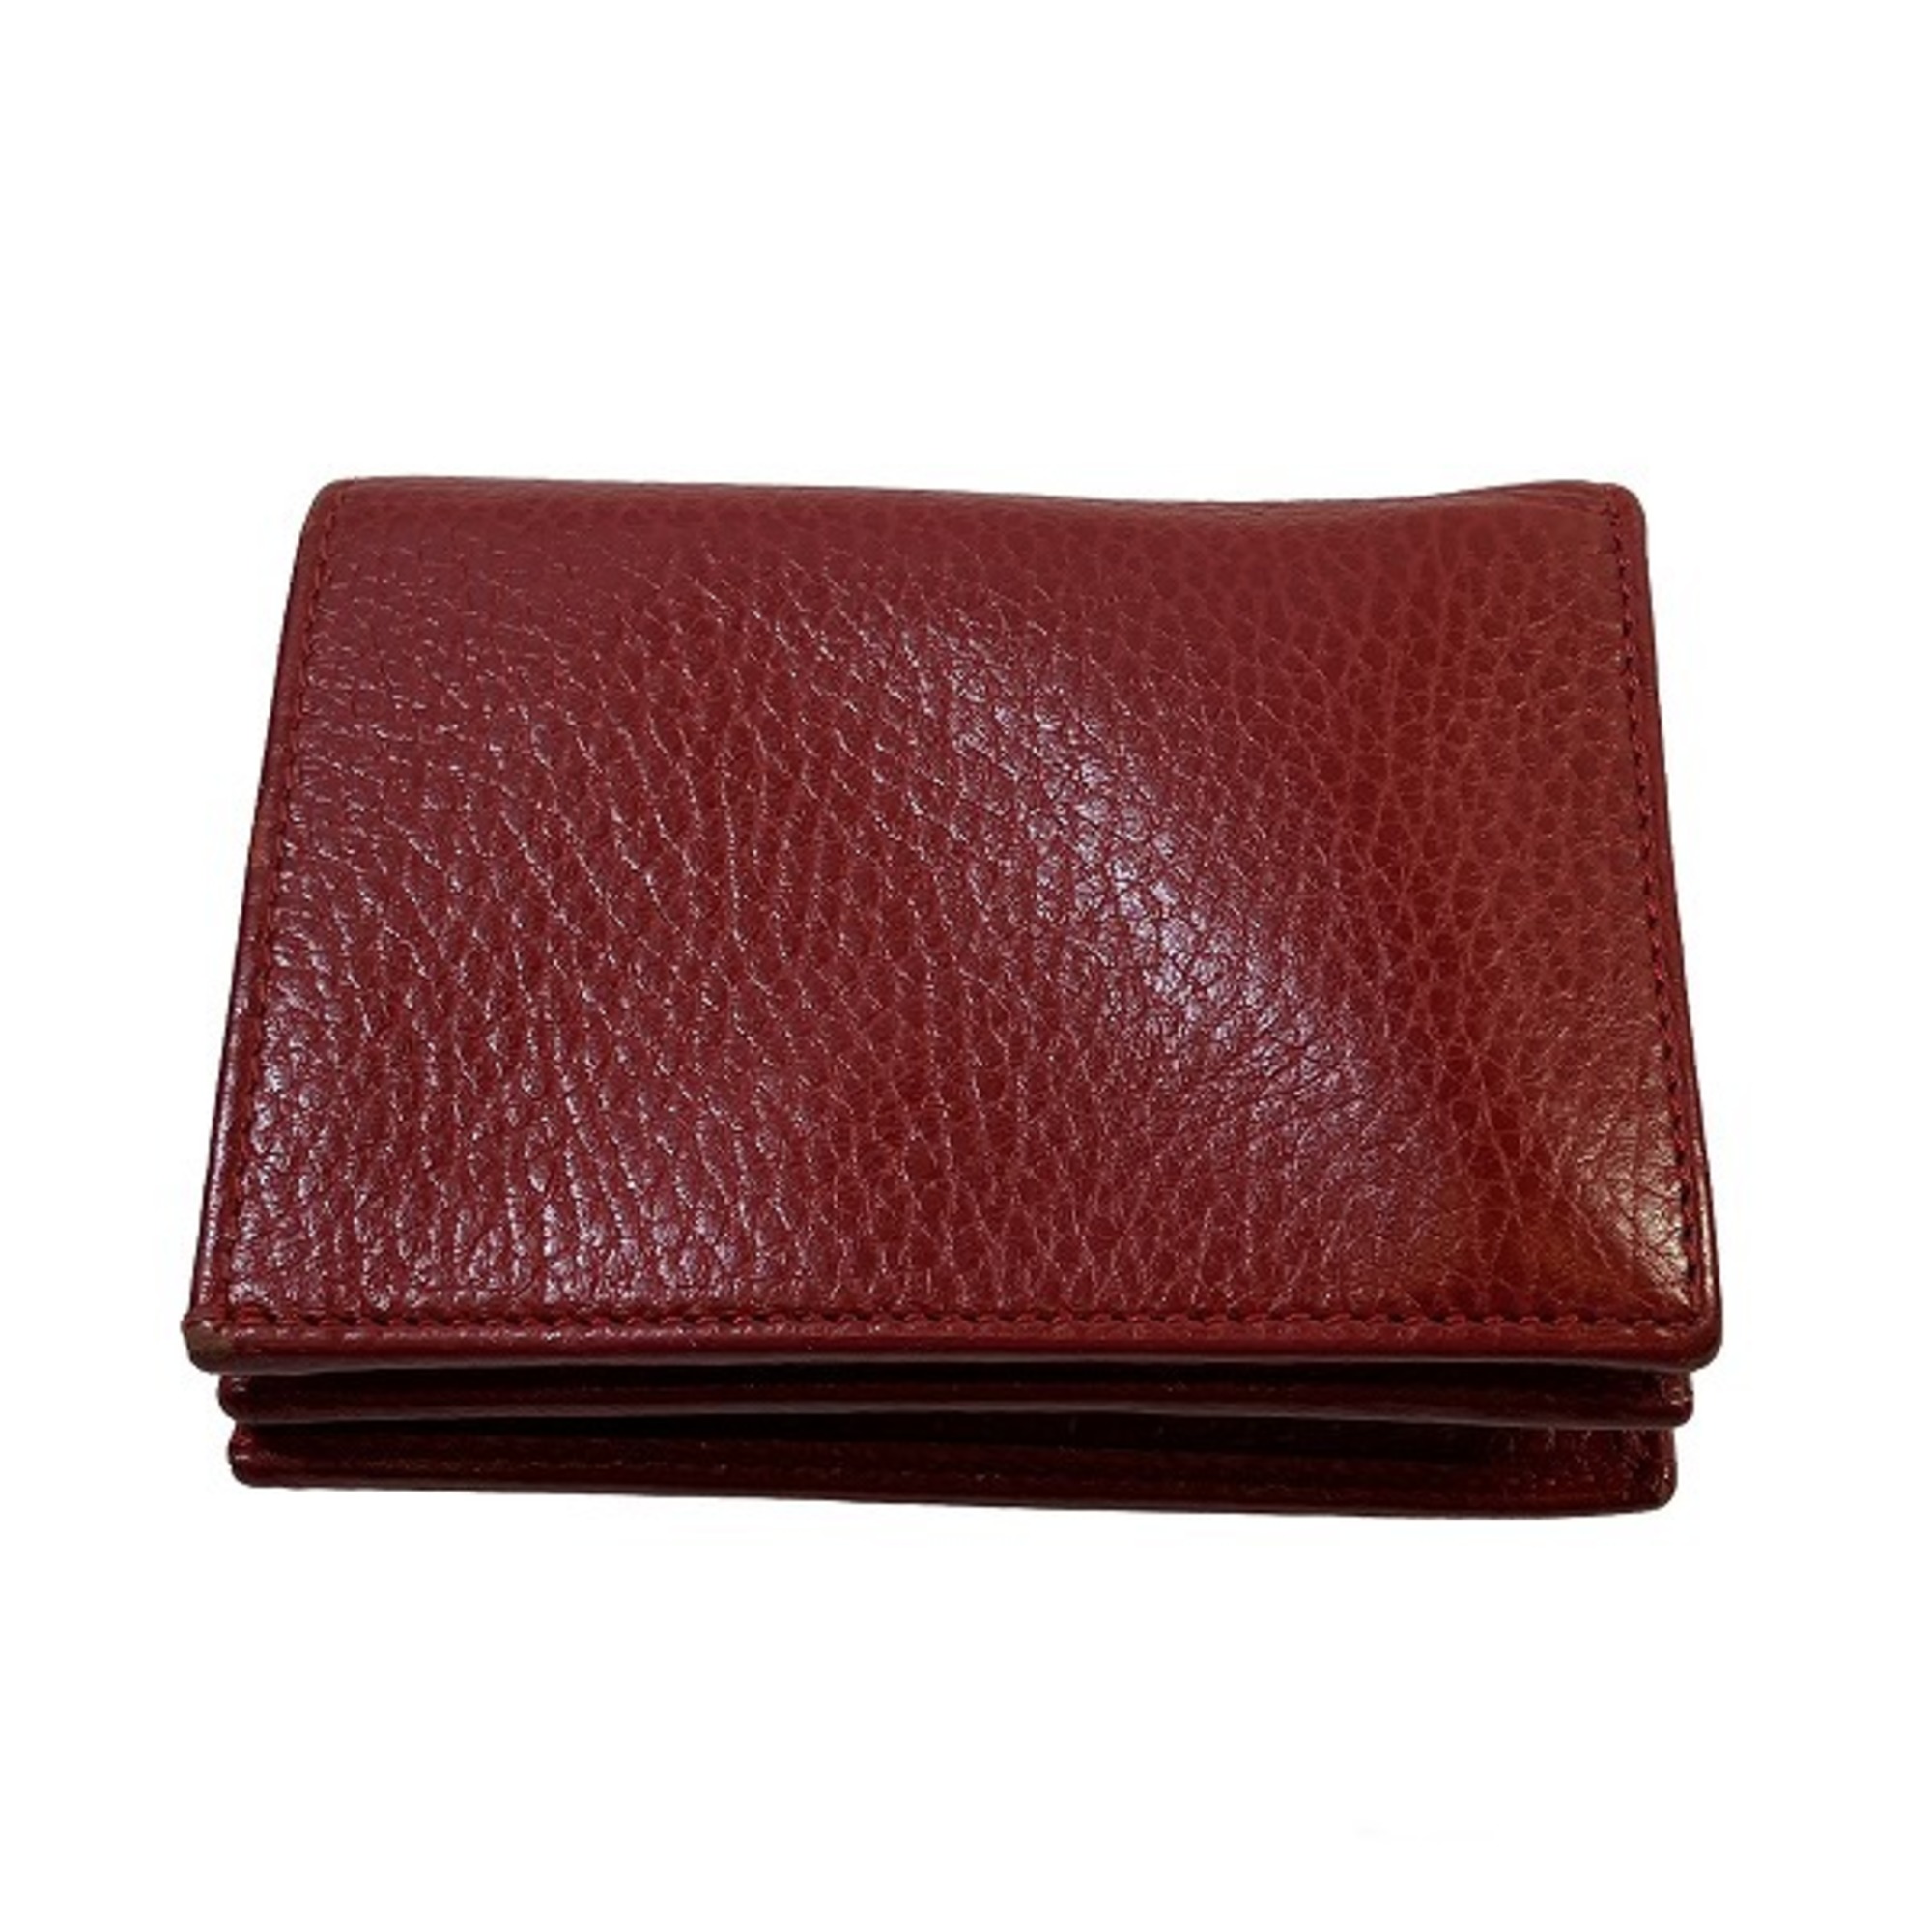 GUCCI GG Marmont 456126 Wallet Bi-fold for Women